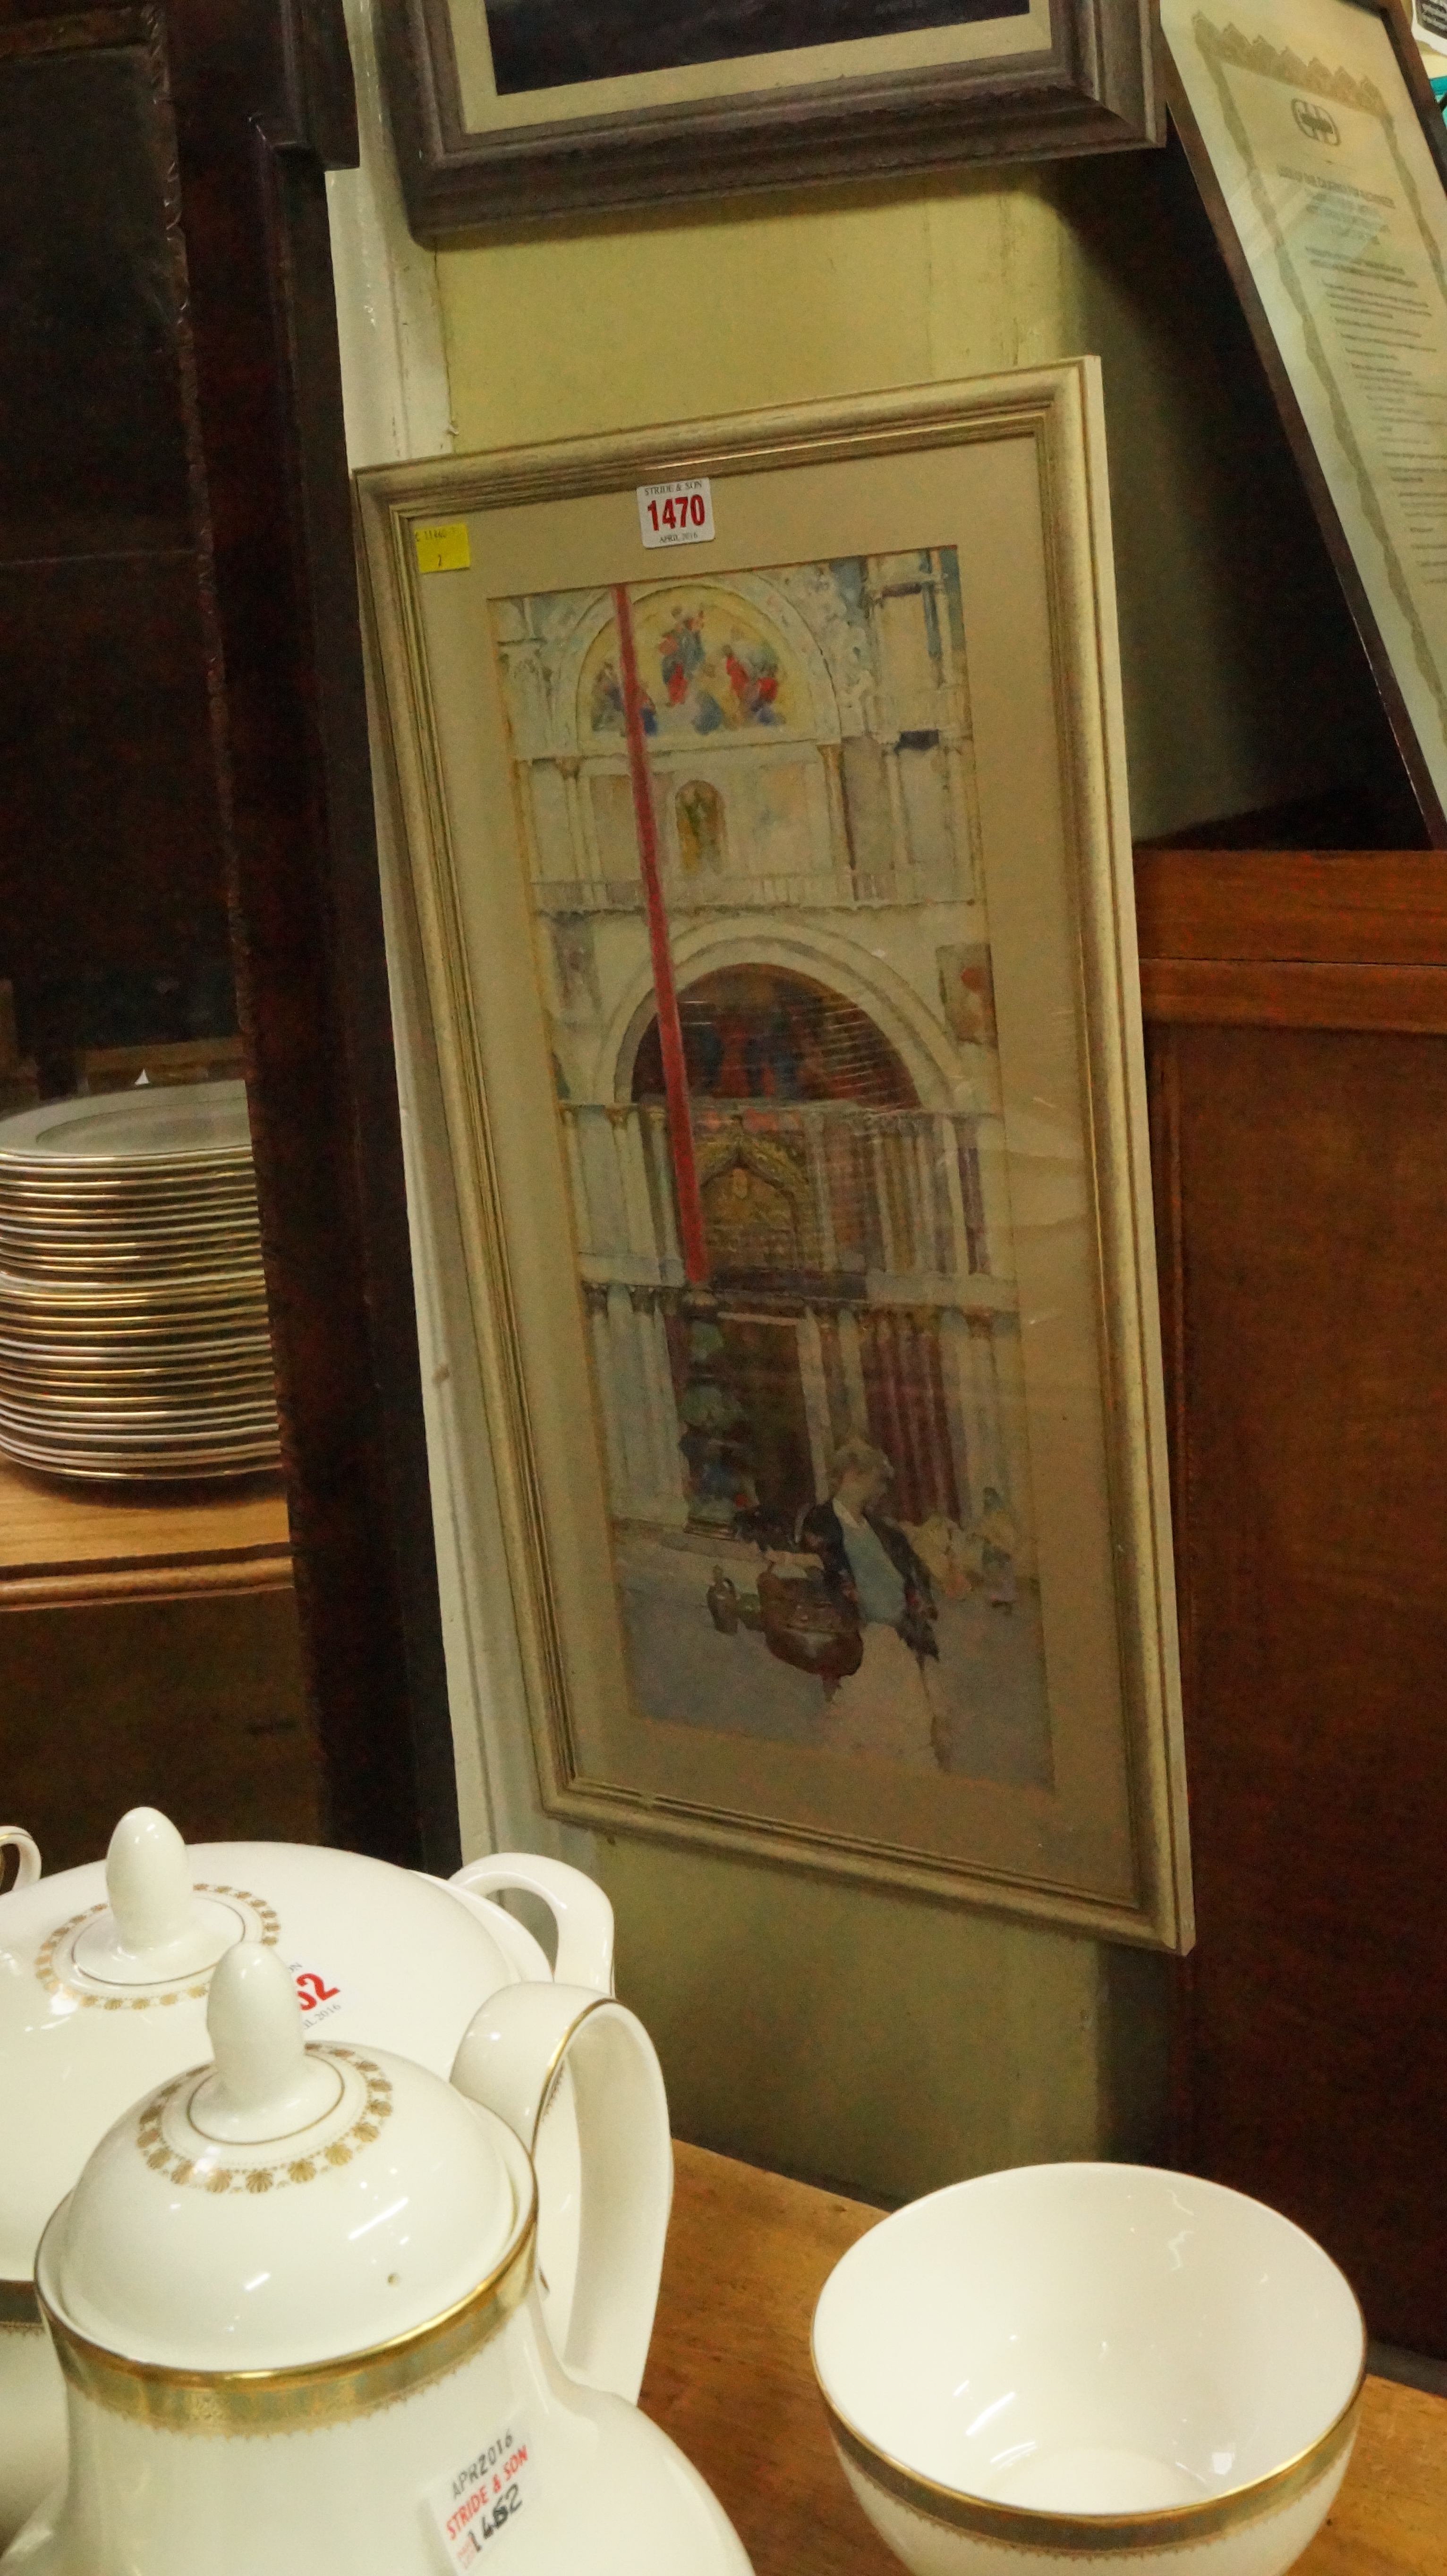 David Woodlock, 'St Mark's Square,Venice', signed, watercolour, 46.5 x 20cm. - Image 2 of 6